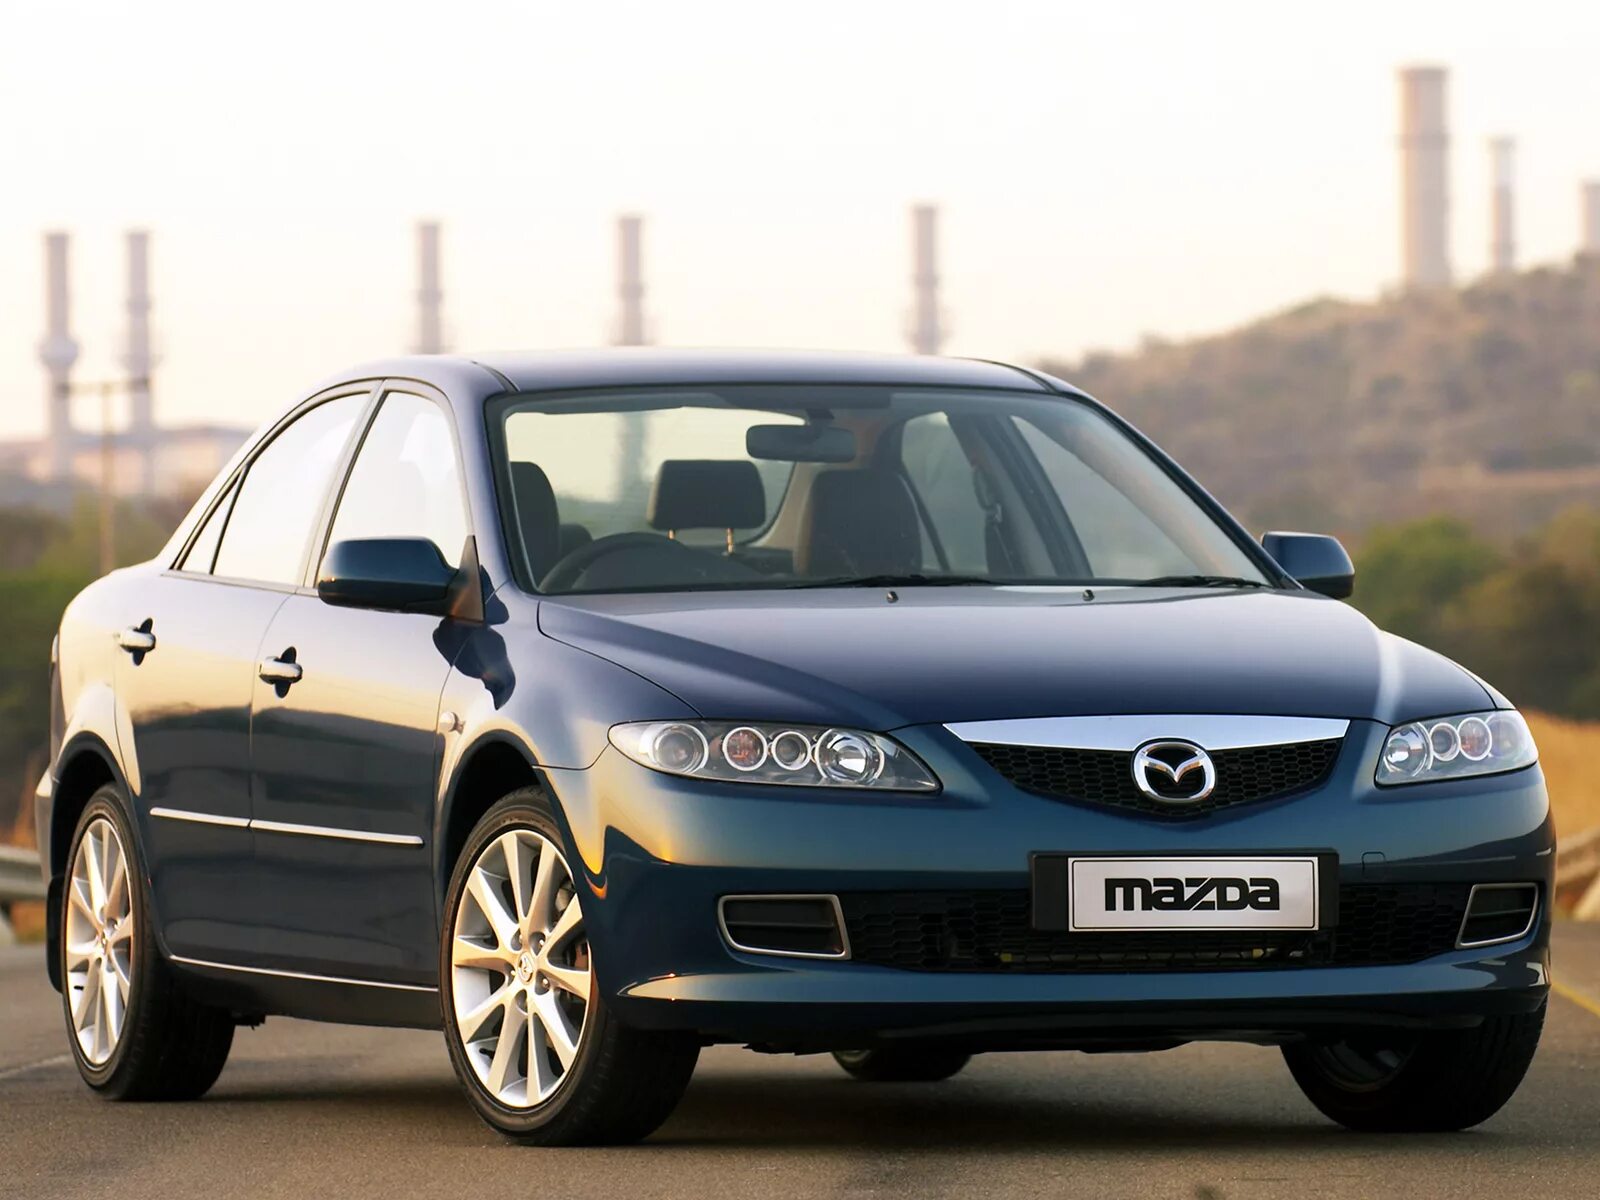 Mazda 6 gg. Mazda 6 gg 2005. Mazda 6 gg 2002. Мазда 6 седан 2005. Mazda gg 2007